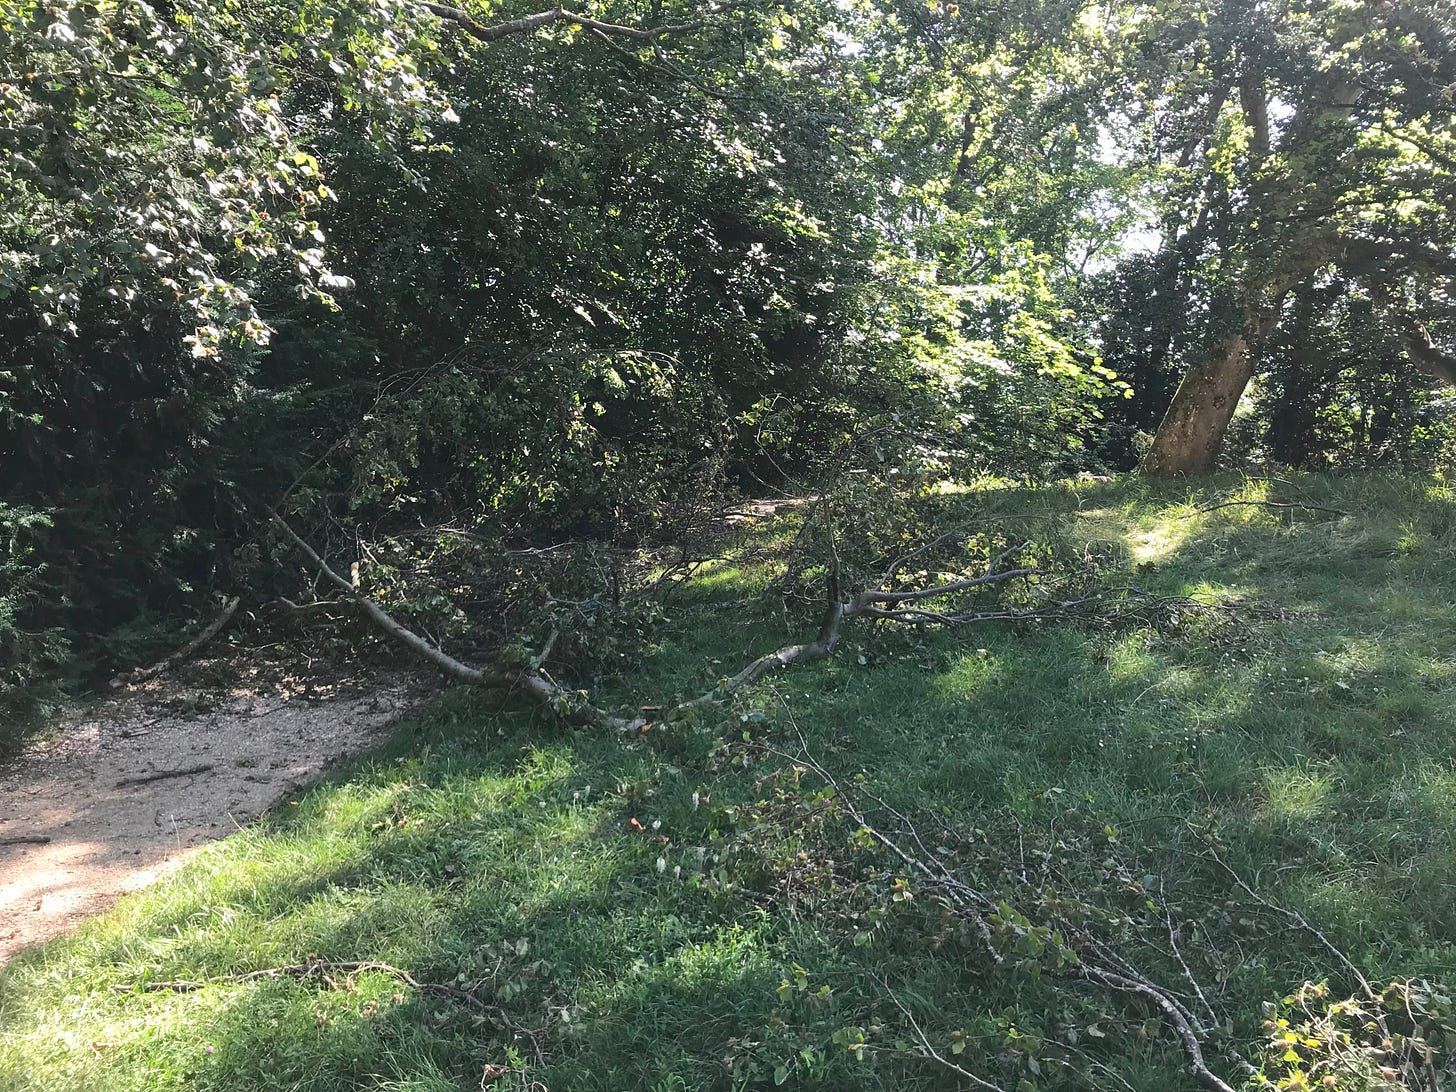 a  fallen branch covers a path